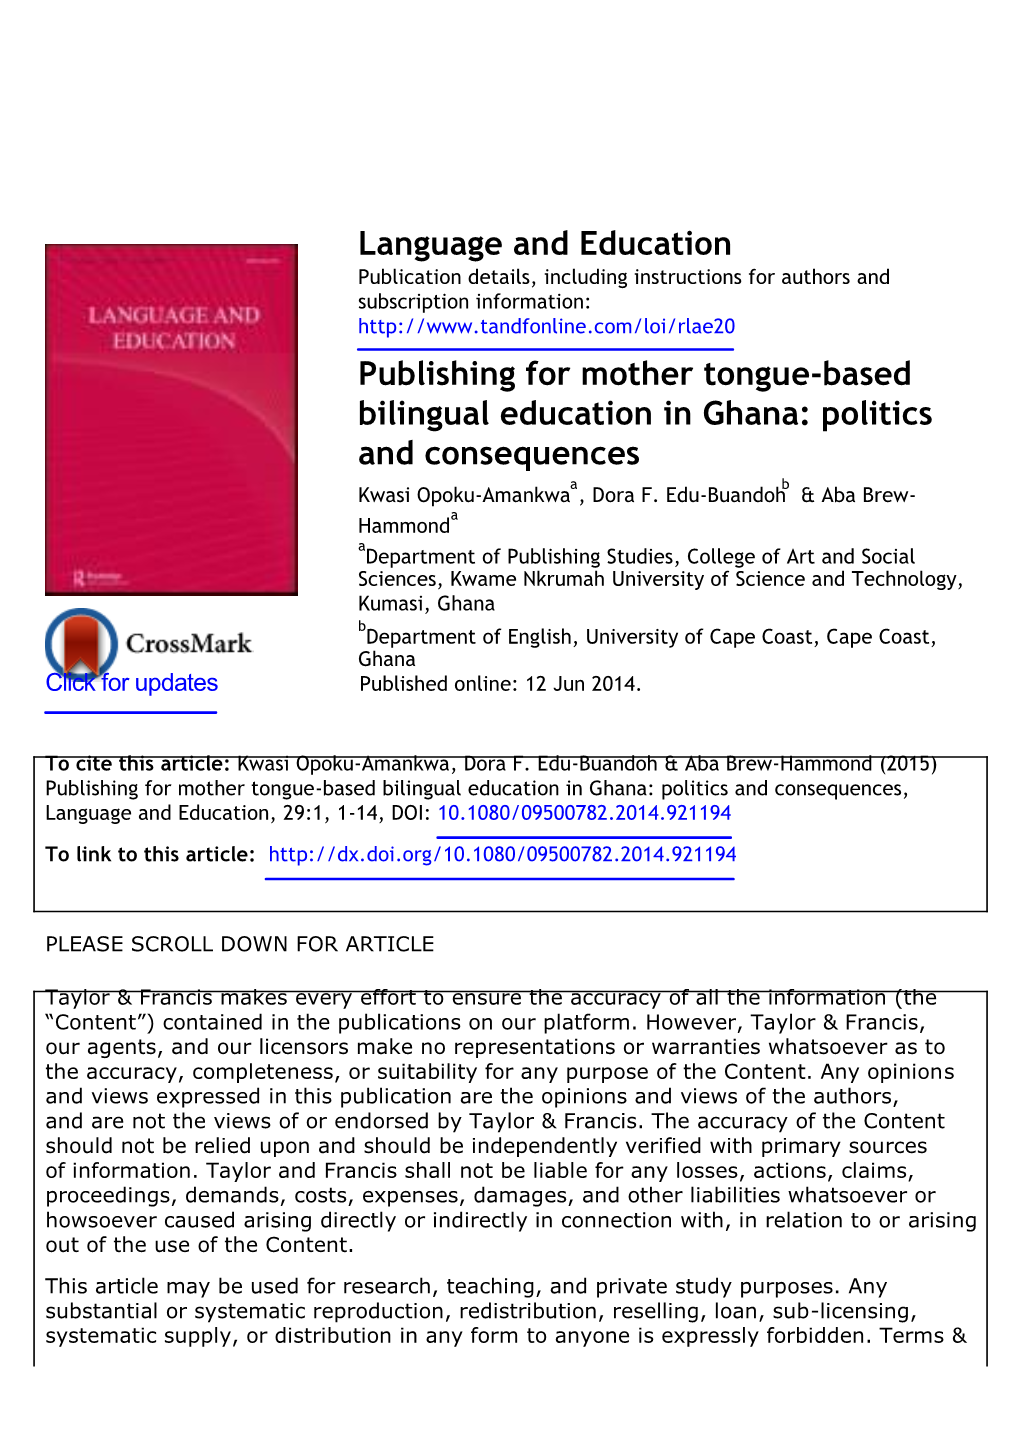 Language and Education Publishing for Mother Tongue-Based Bilingual